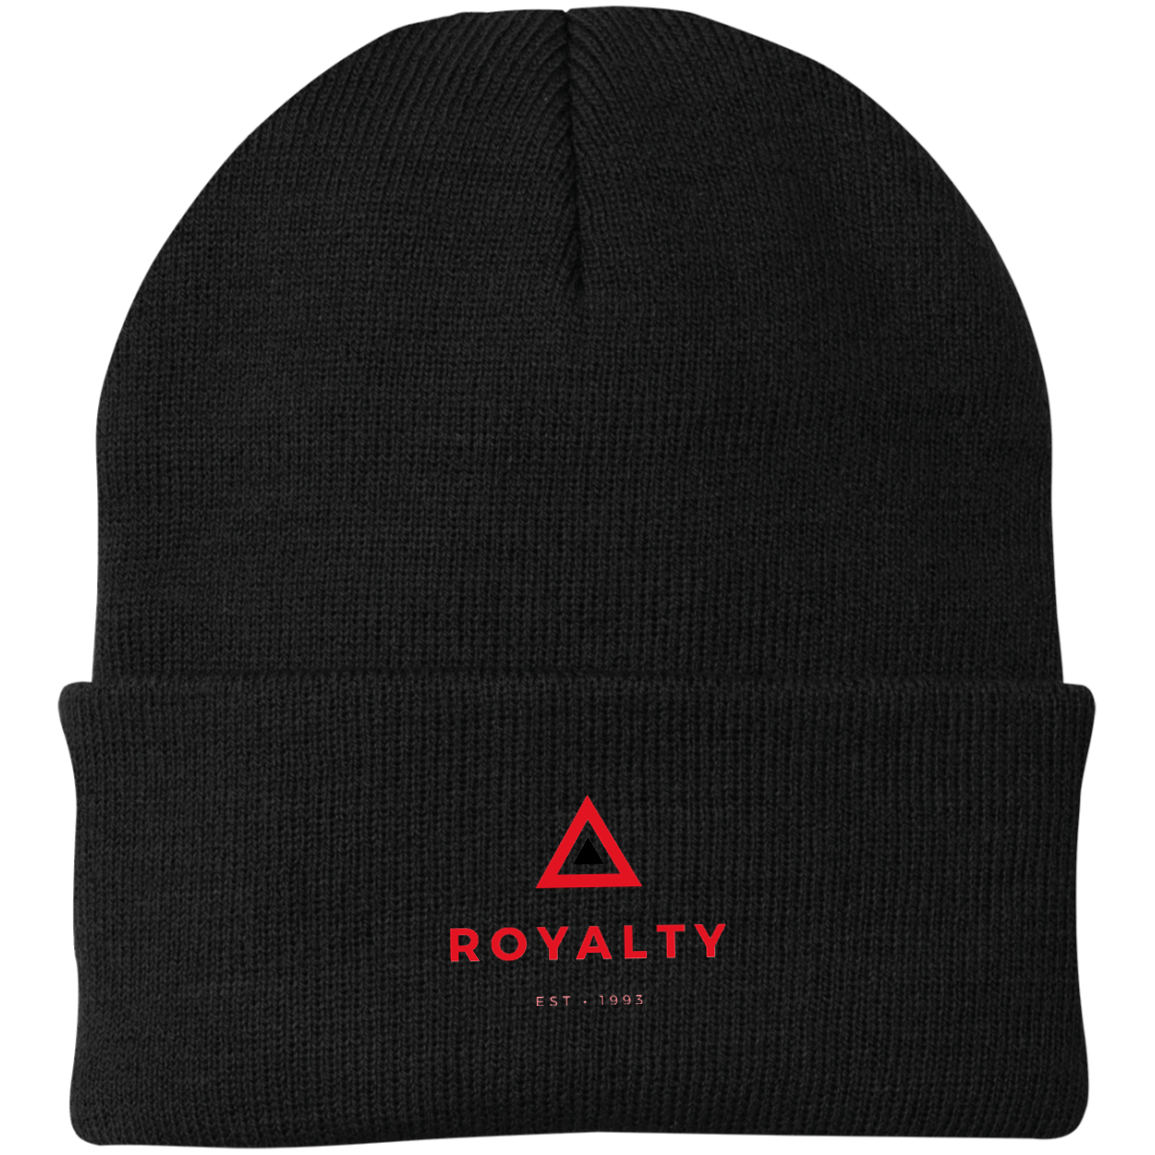 Royalty Knit Cap